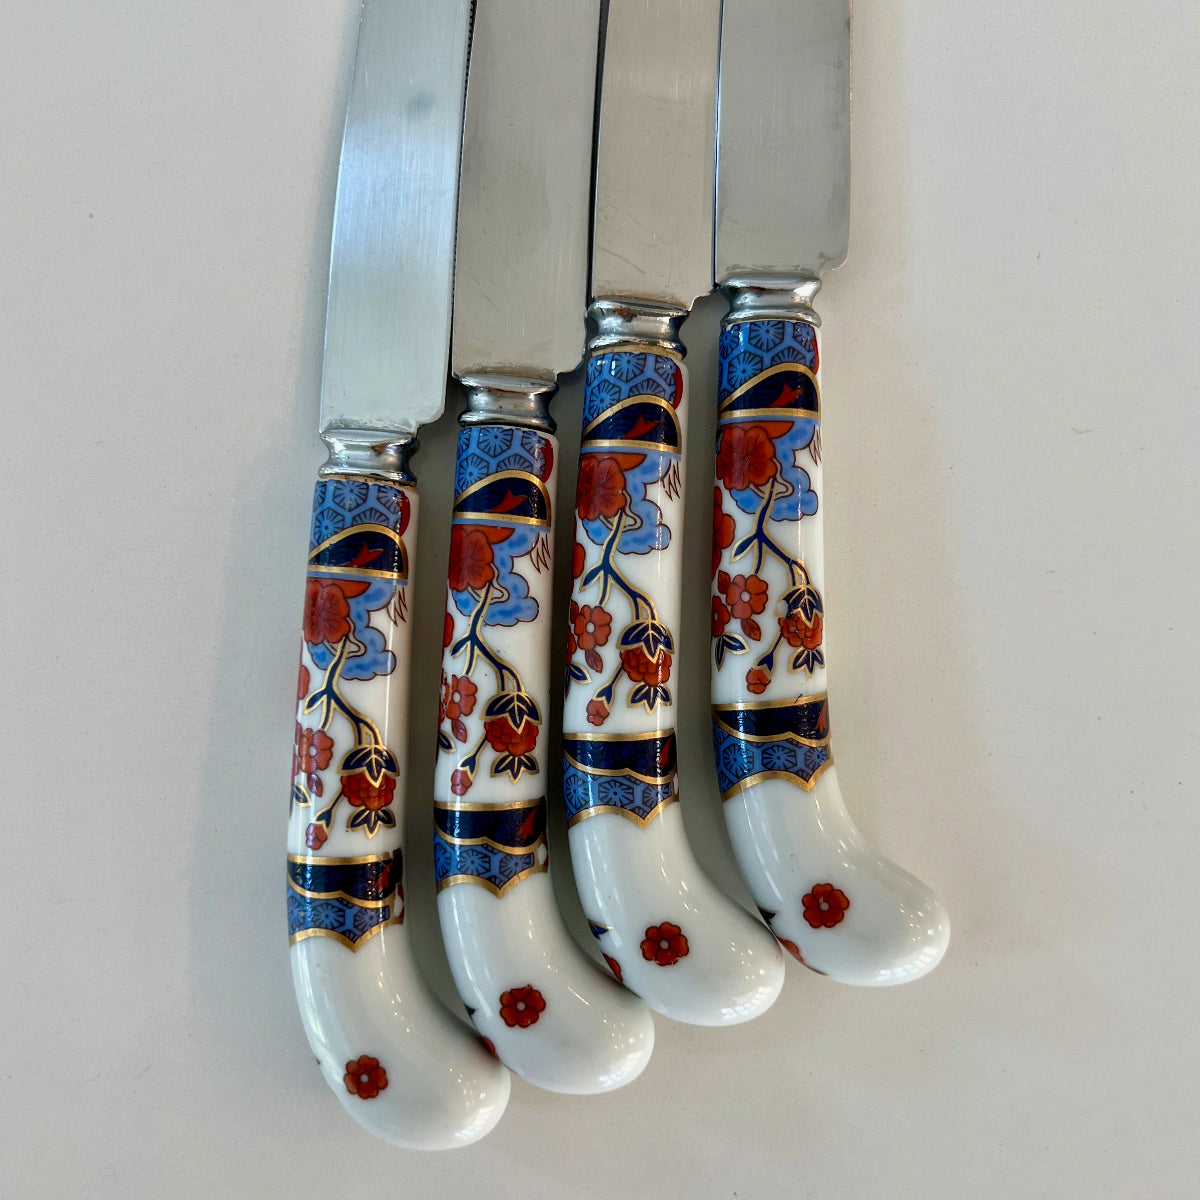 Vintage Phil Sheffield knives 4 knives